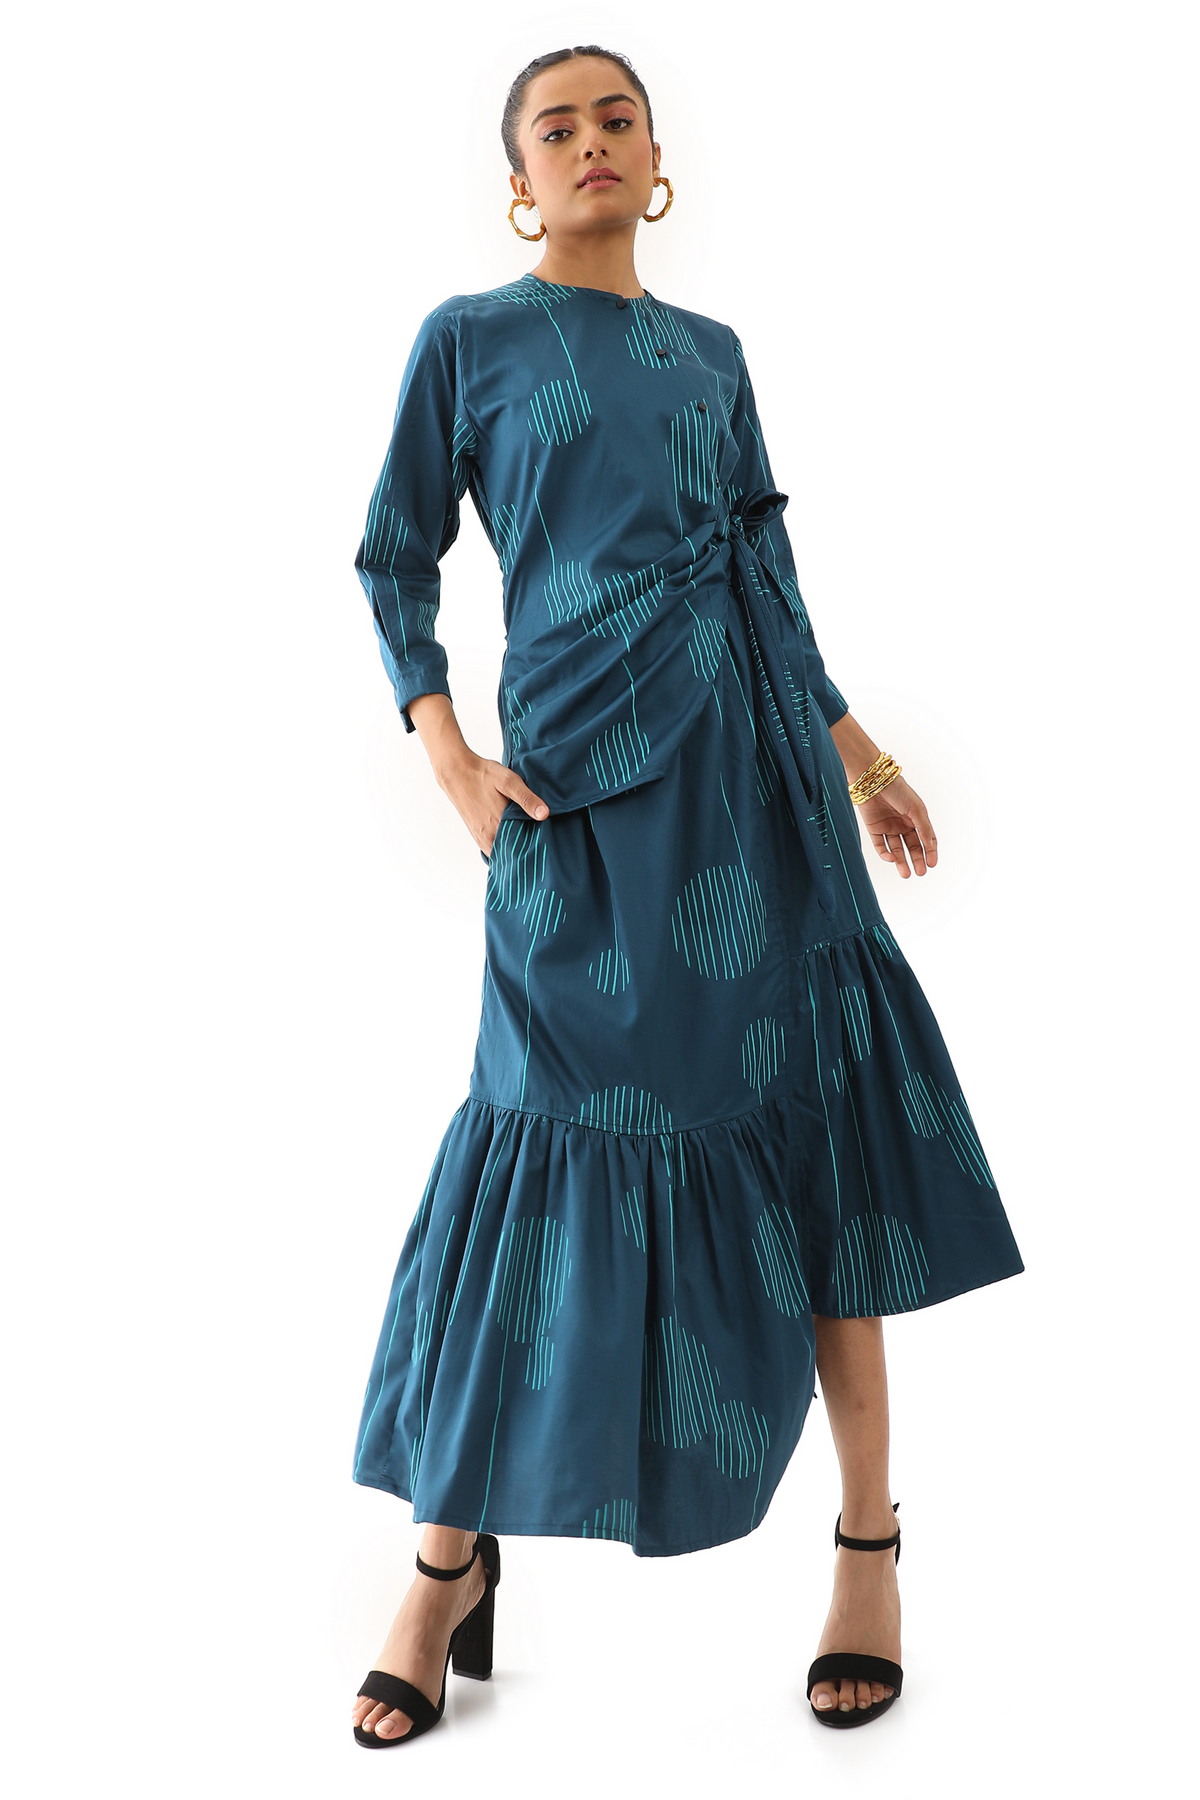 Alila - Blue Dress